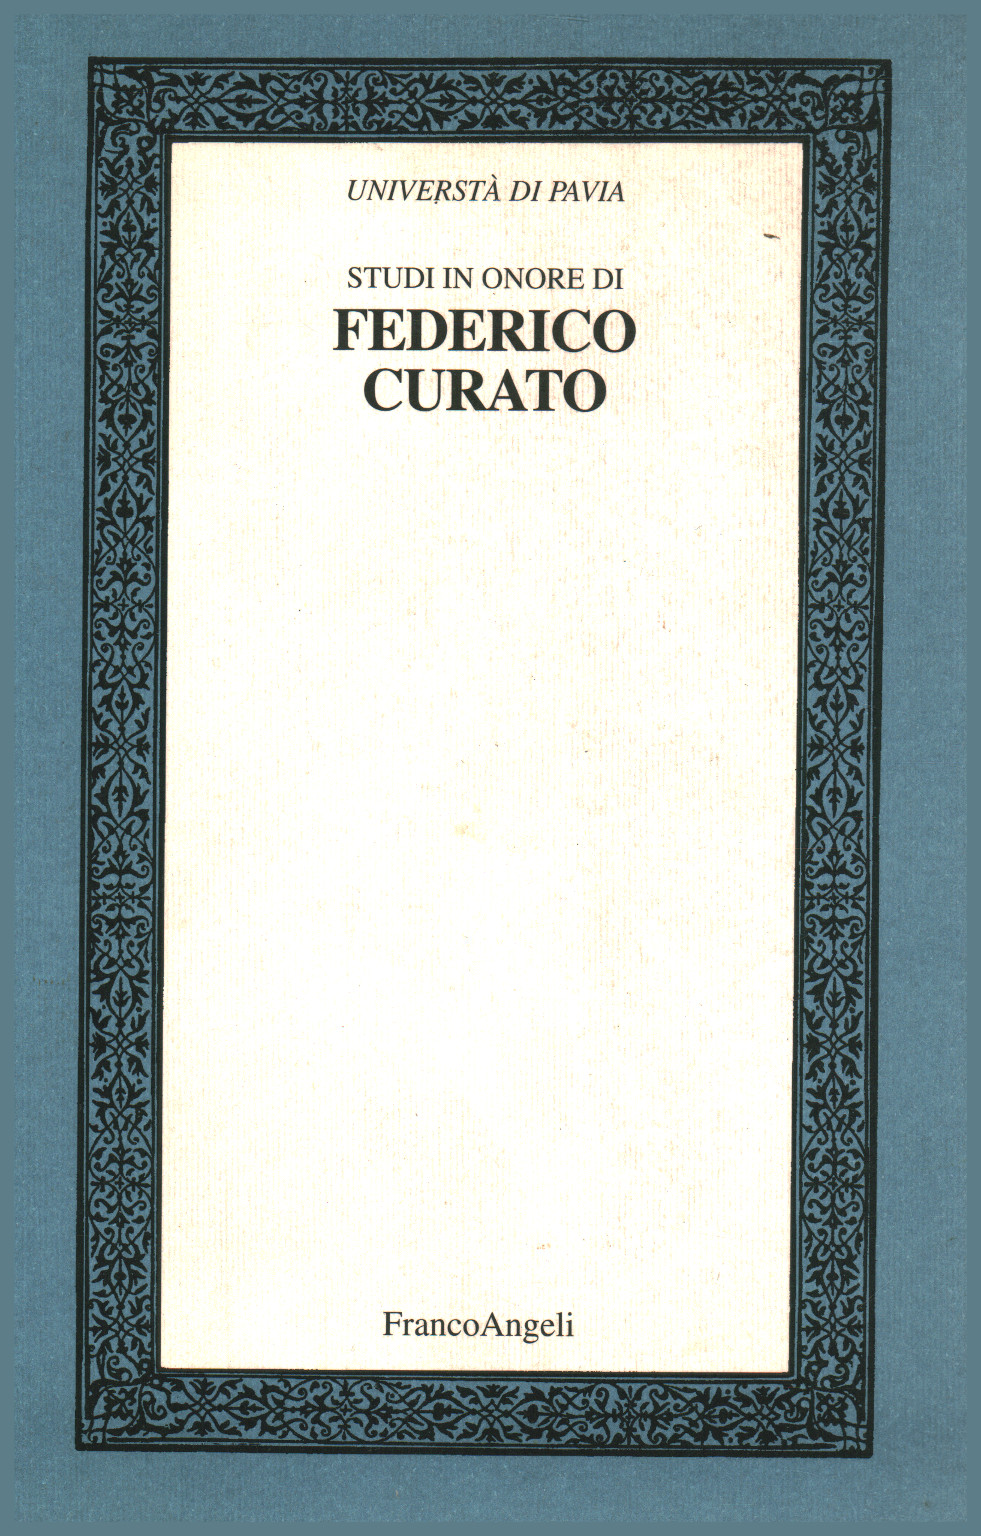 Studies in honor of Frederick Edited Volume II, s.a.